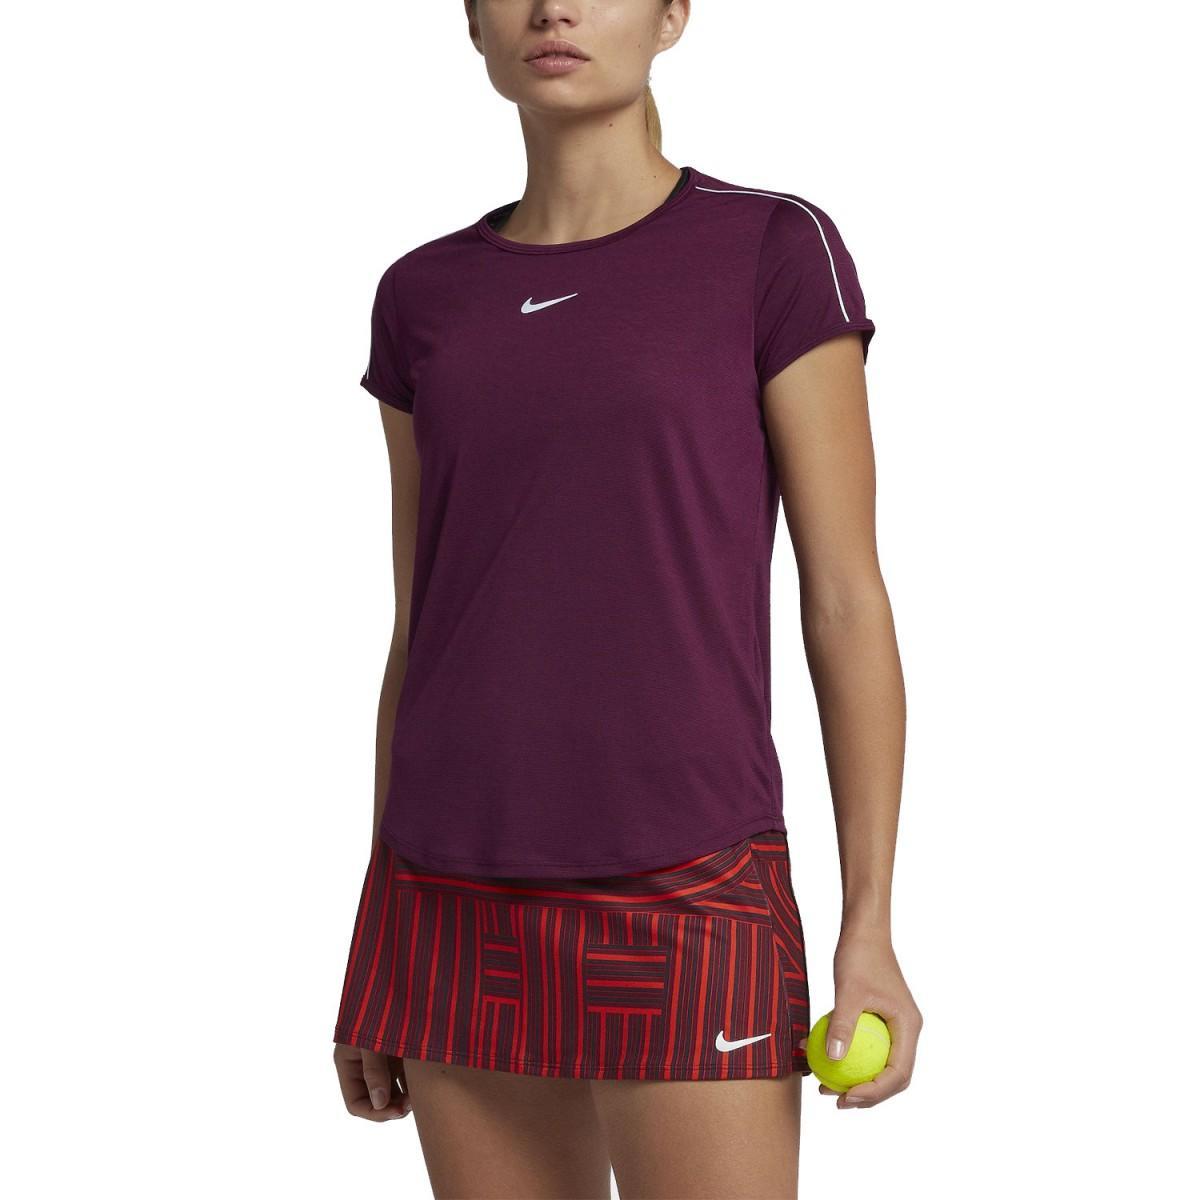 Теннисная футболка женская Nike Court Dry Top bordeaux/white